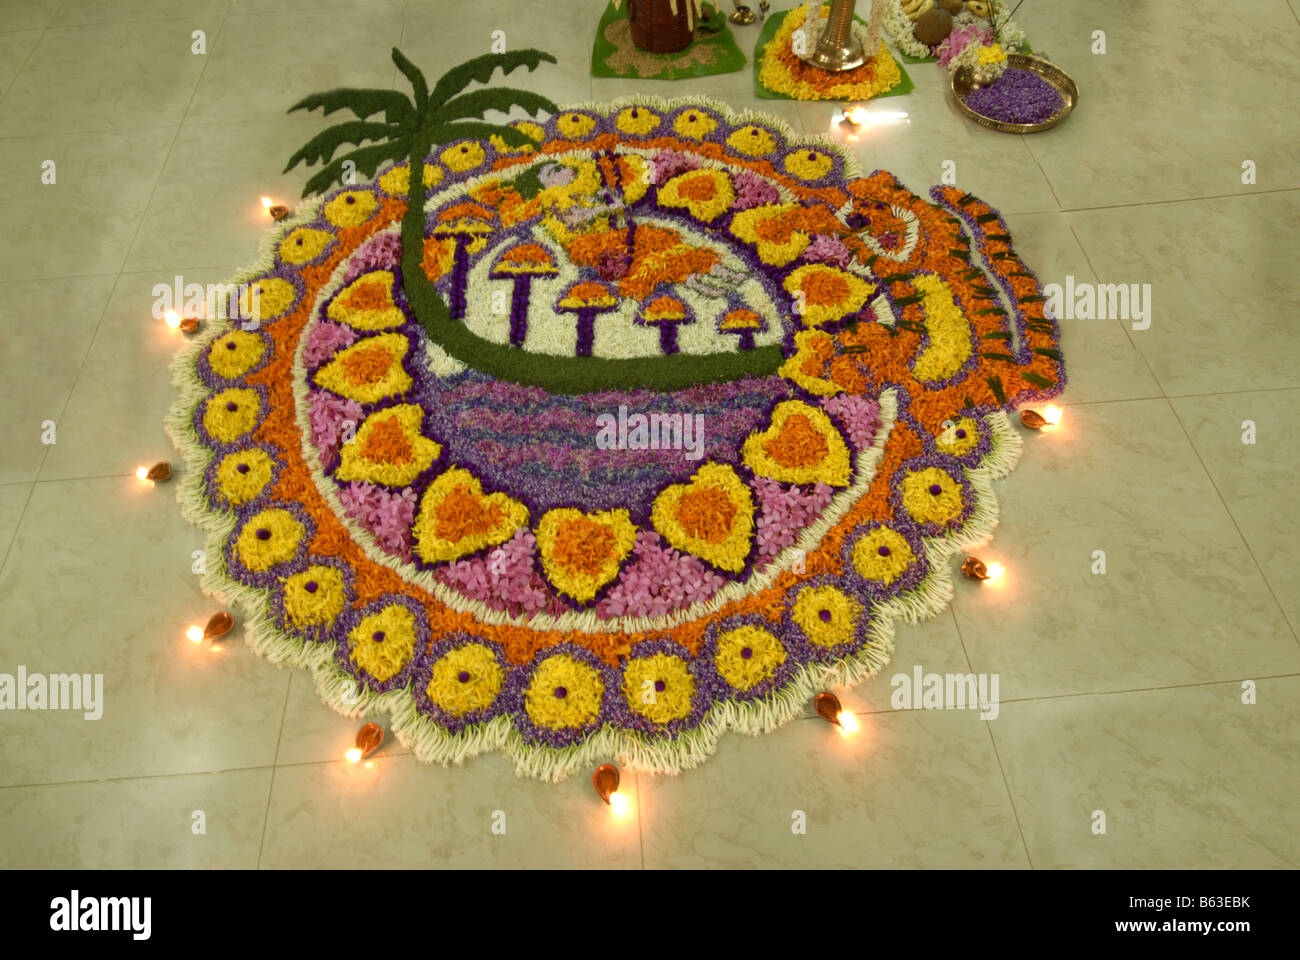 FLOWER CARPET DURING ONAM CELEBRATOINS IN KERALA INDIA Stock Photo